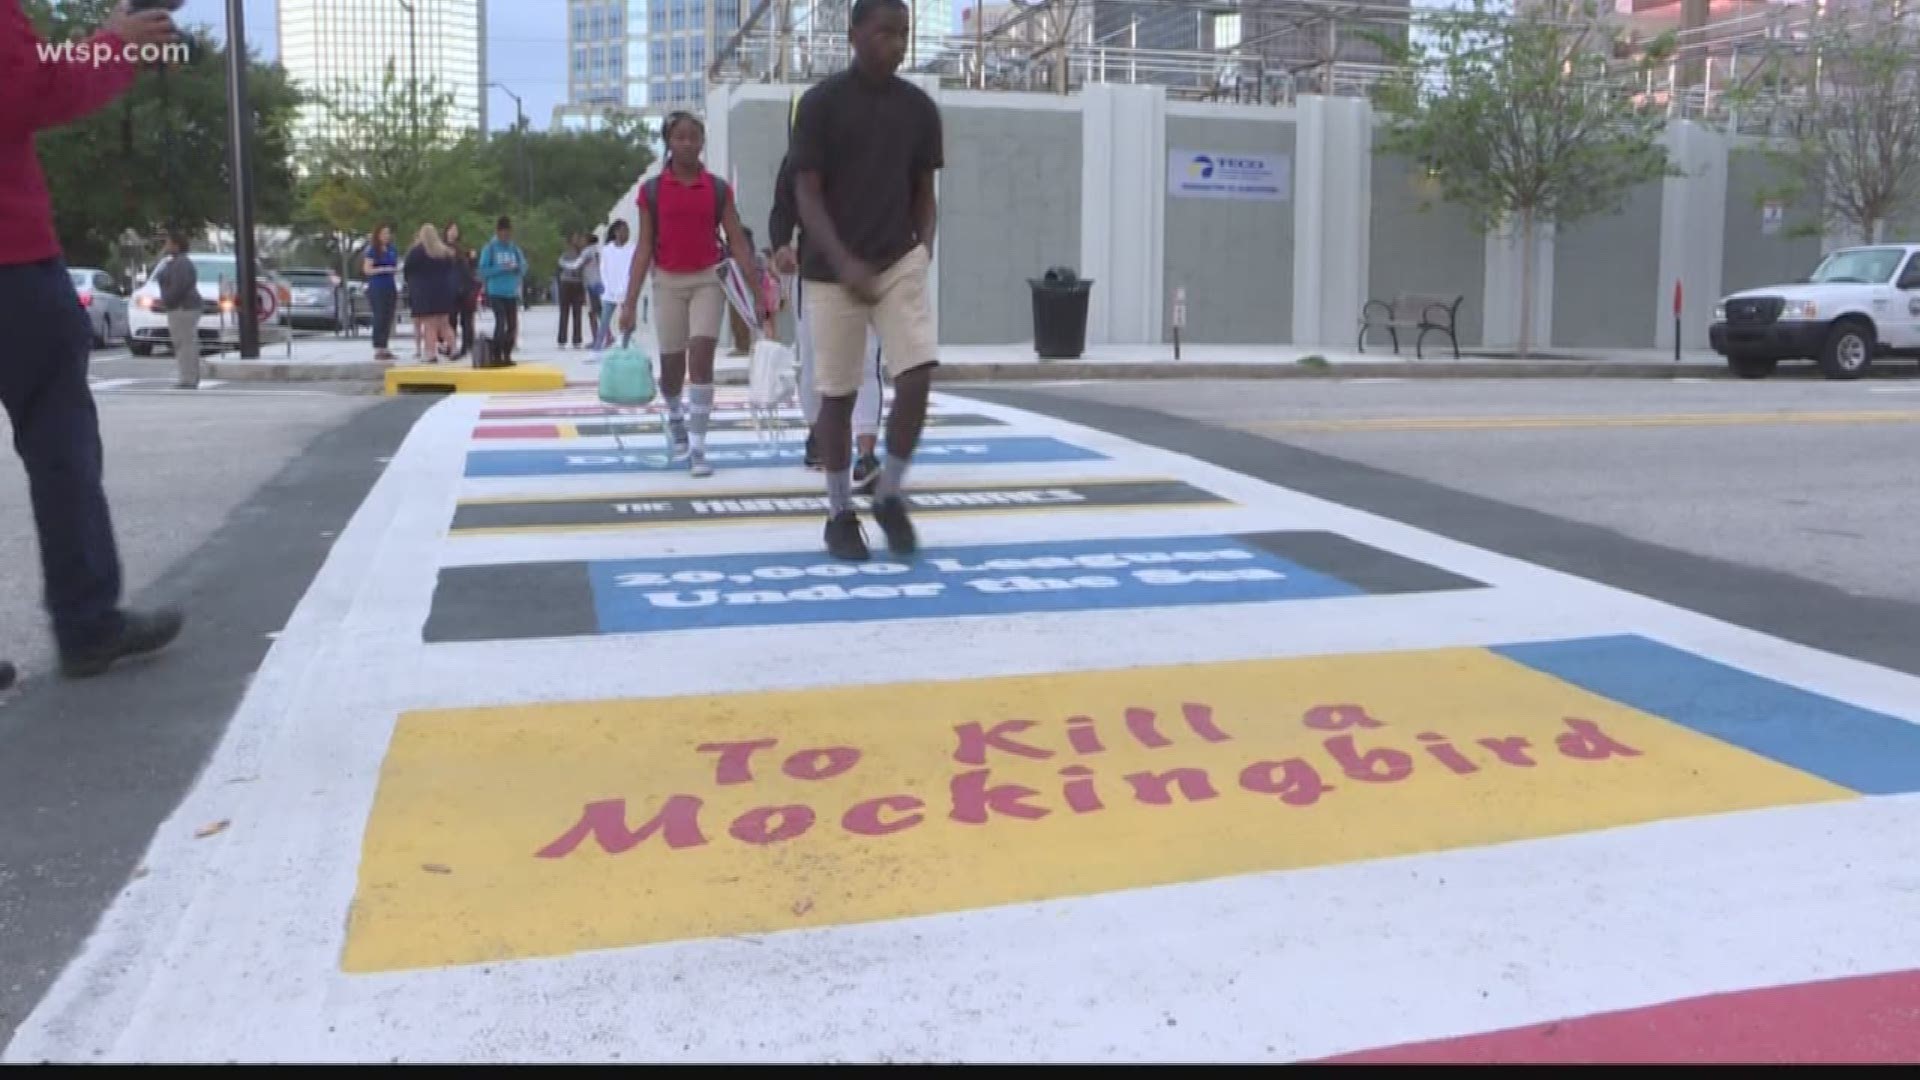 The Crosswalks to Classrooms initiative features a crosswalk depicting titles of popular children's books.